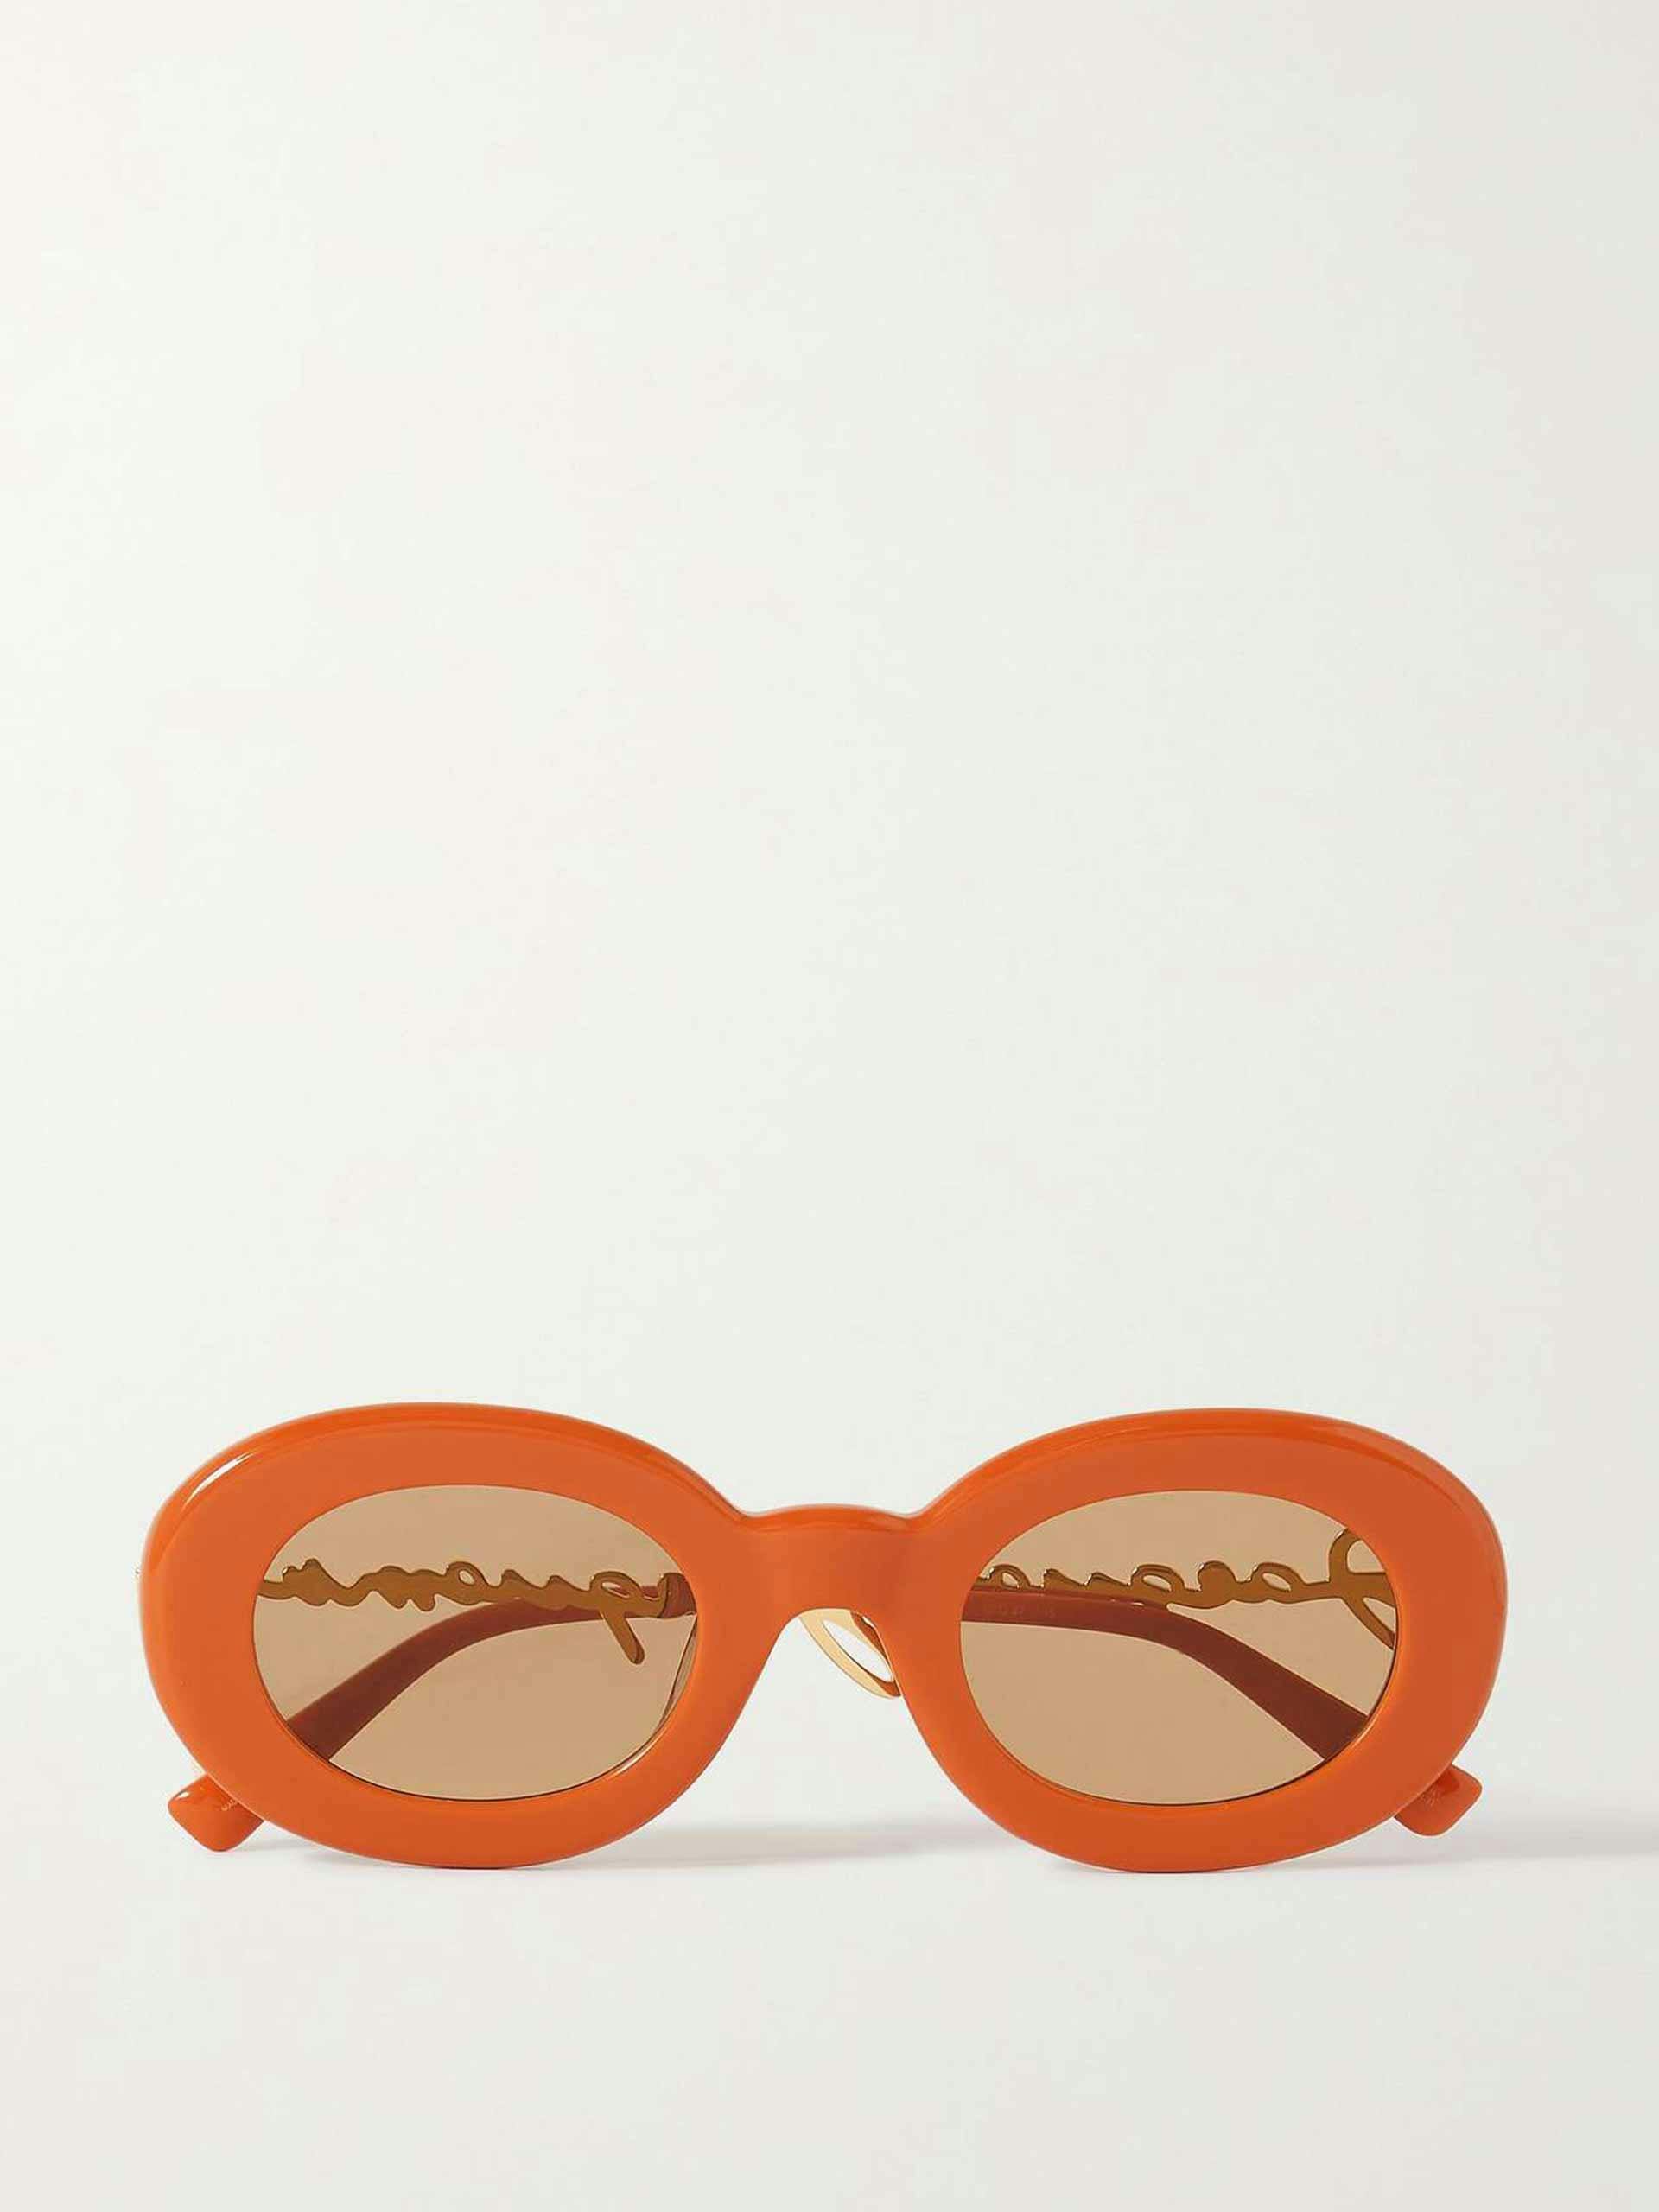 Round-frame acetate sunglasses